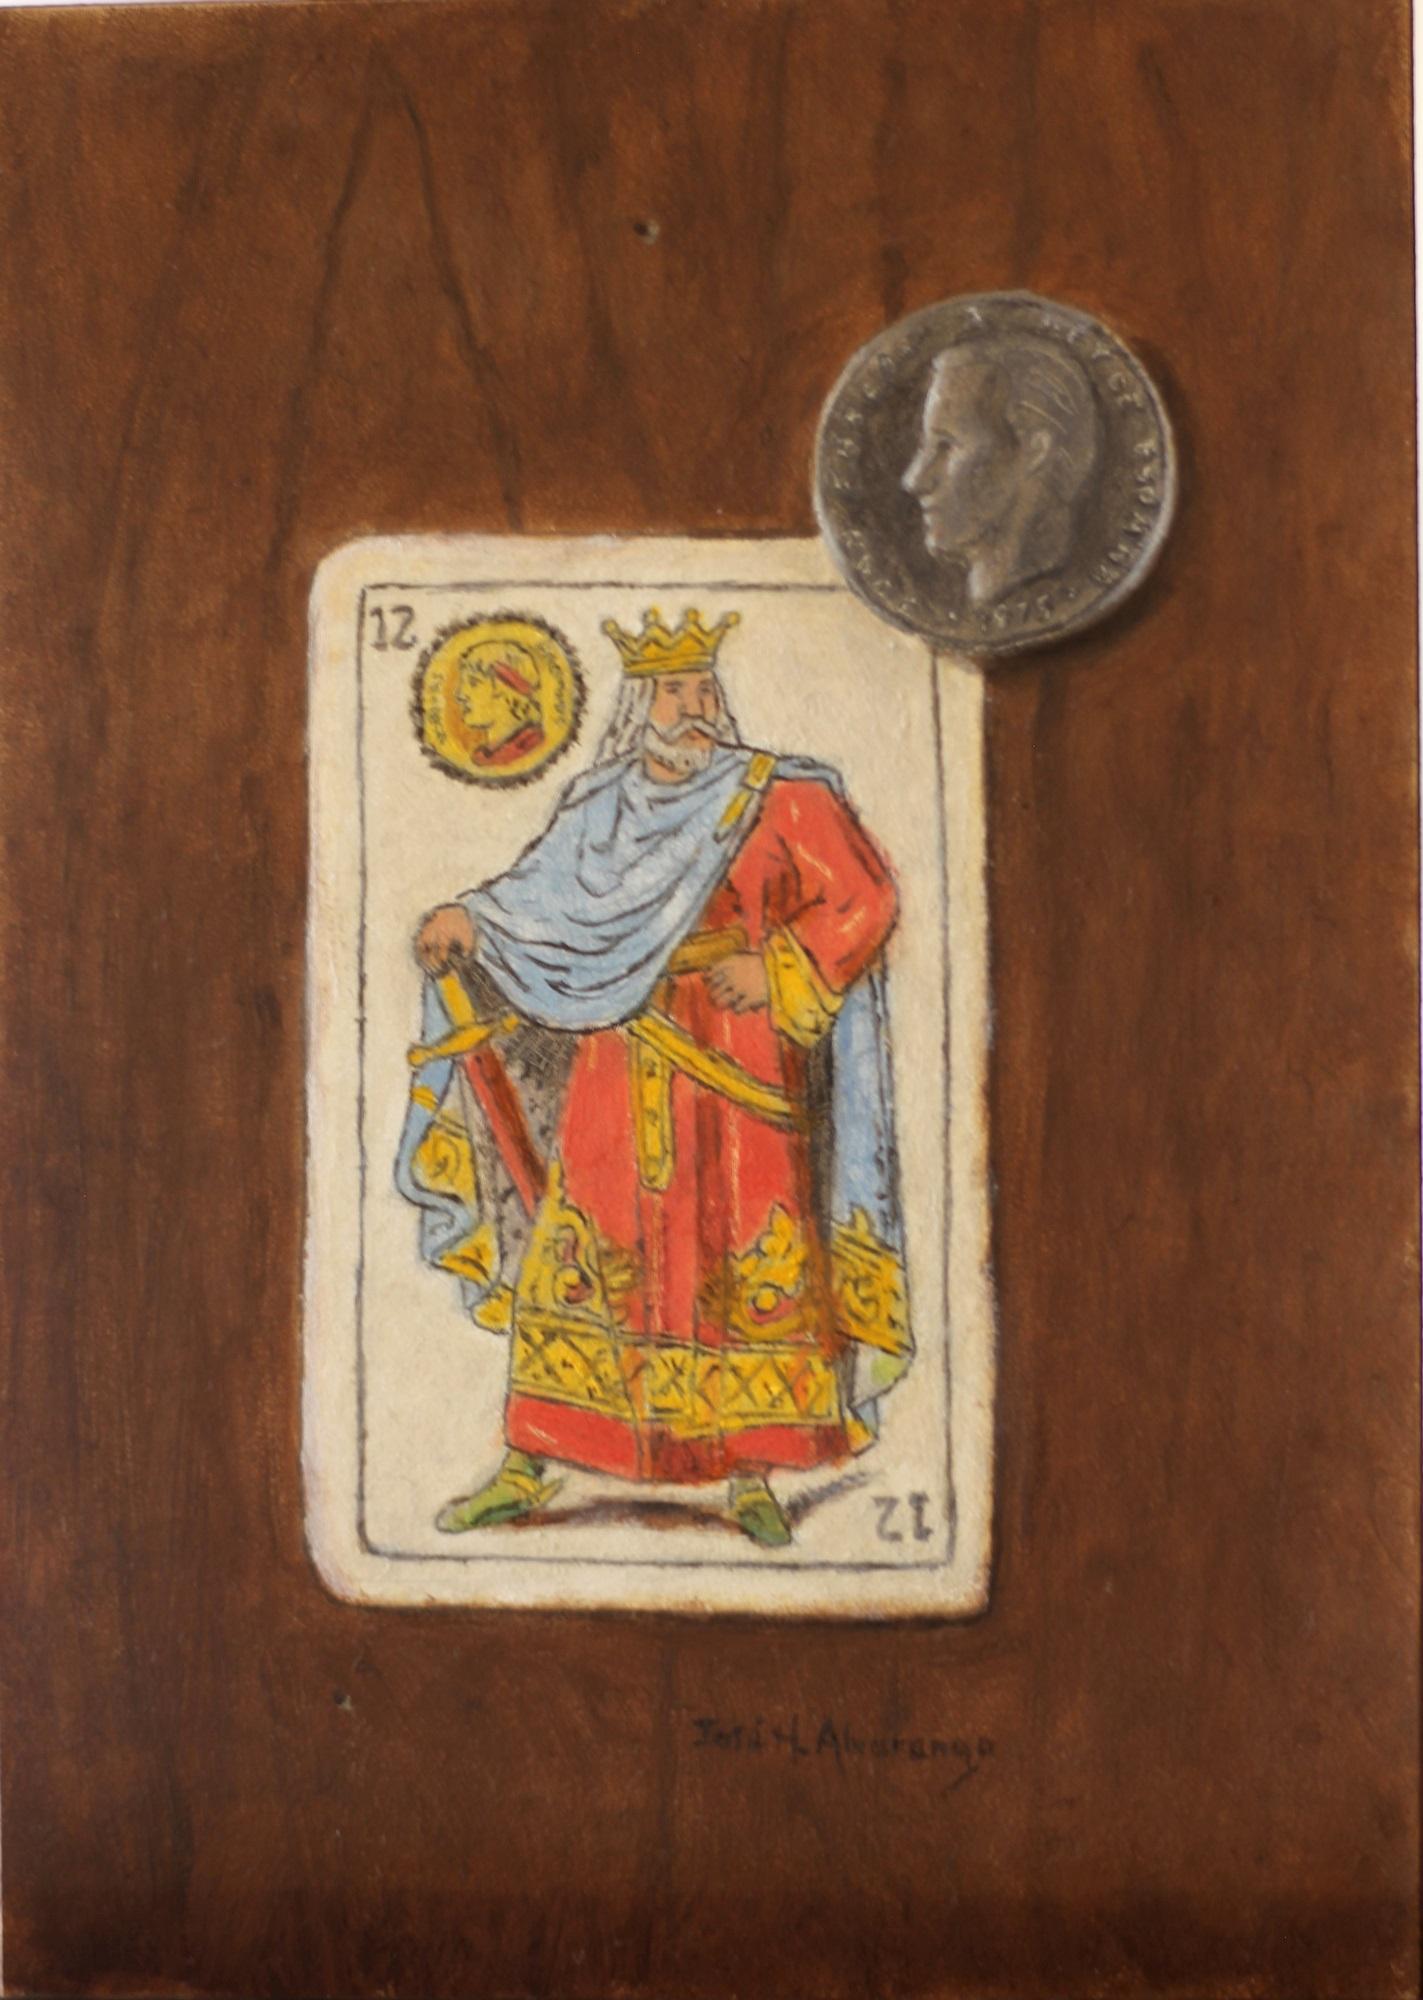 Money is the King - Art by Jose H. Alvarenga